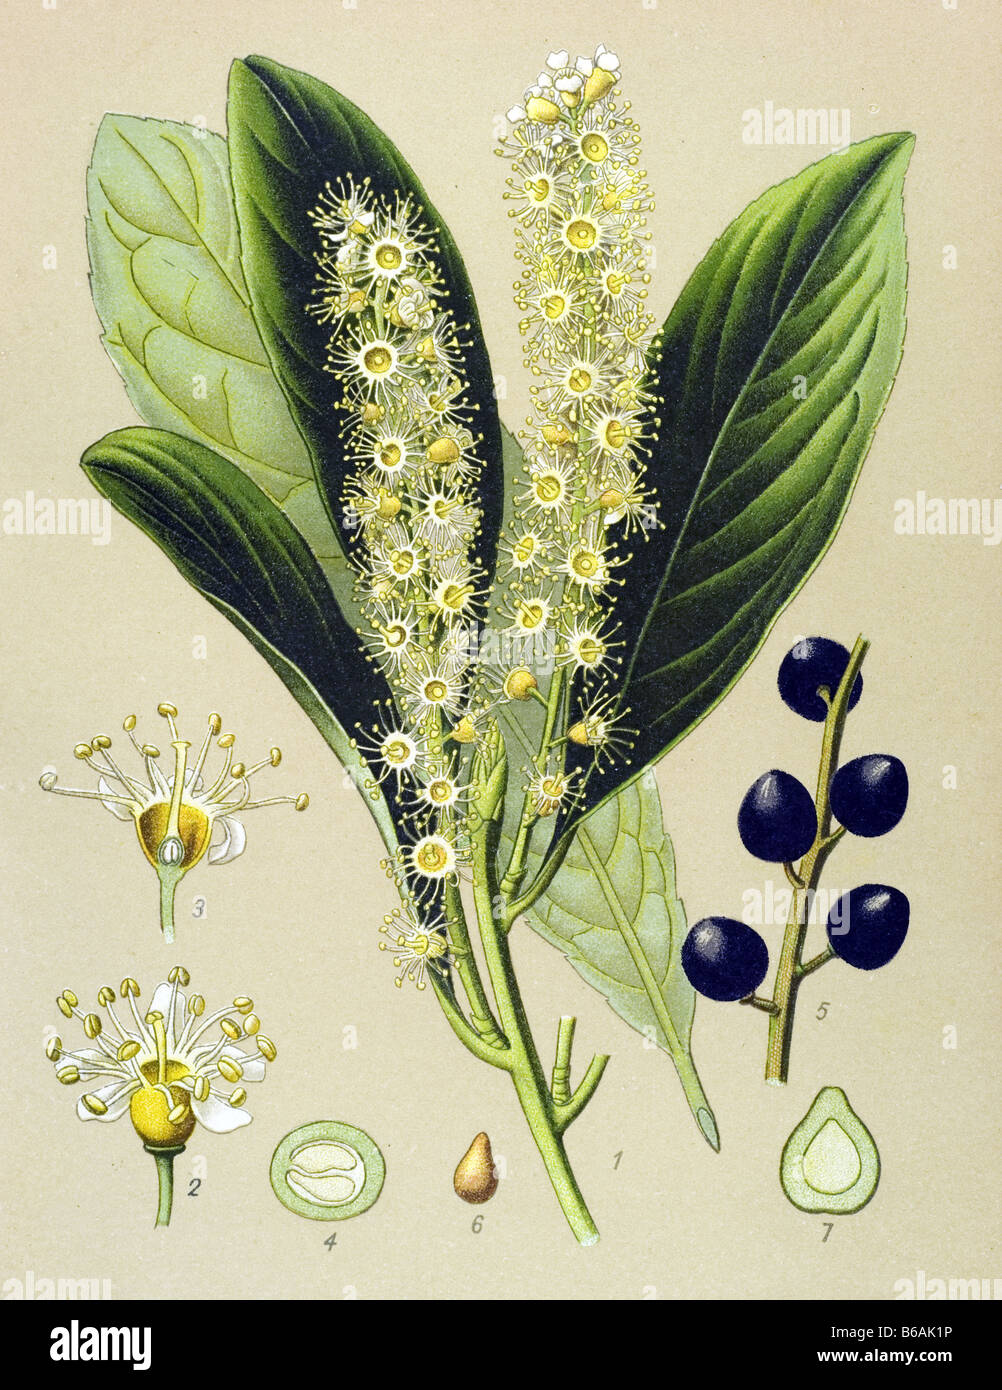 Cherry laurel, Prunus laurocerasus poisonous plants illustrations Stock Photo